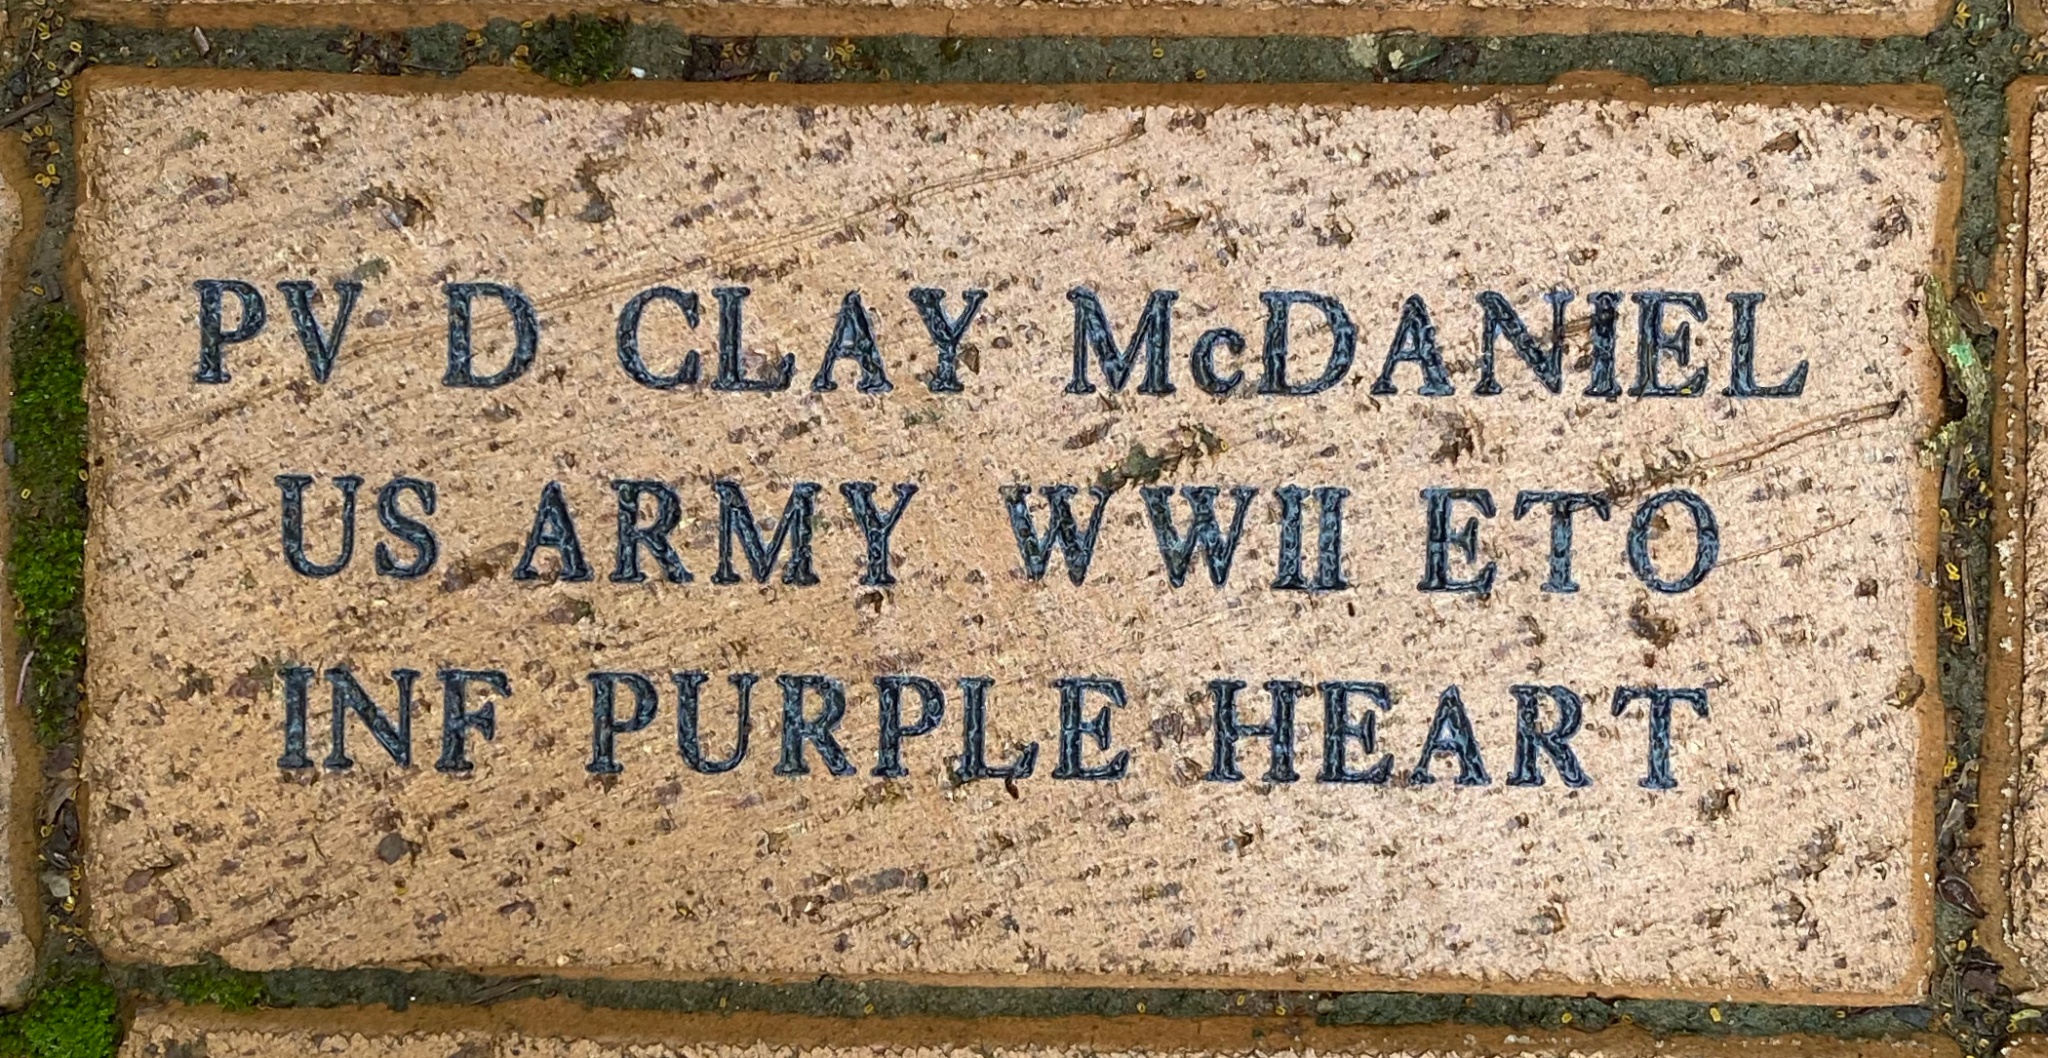 PV D CLAY McDANIEL US ARMY WWII ETO INF PURPLE HEART